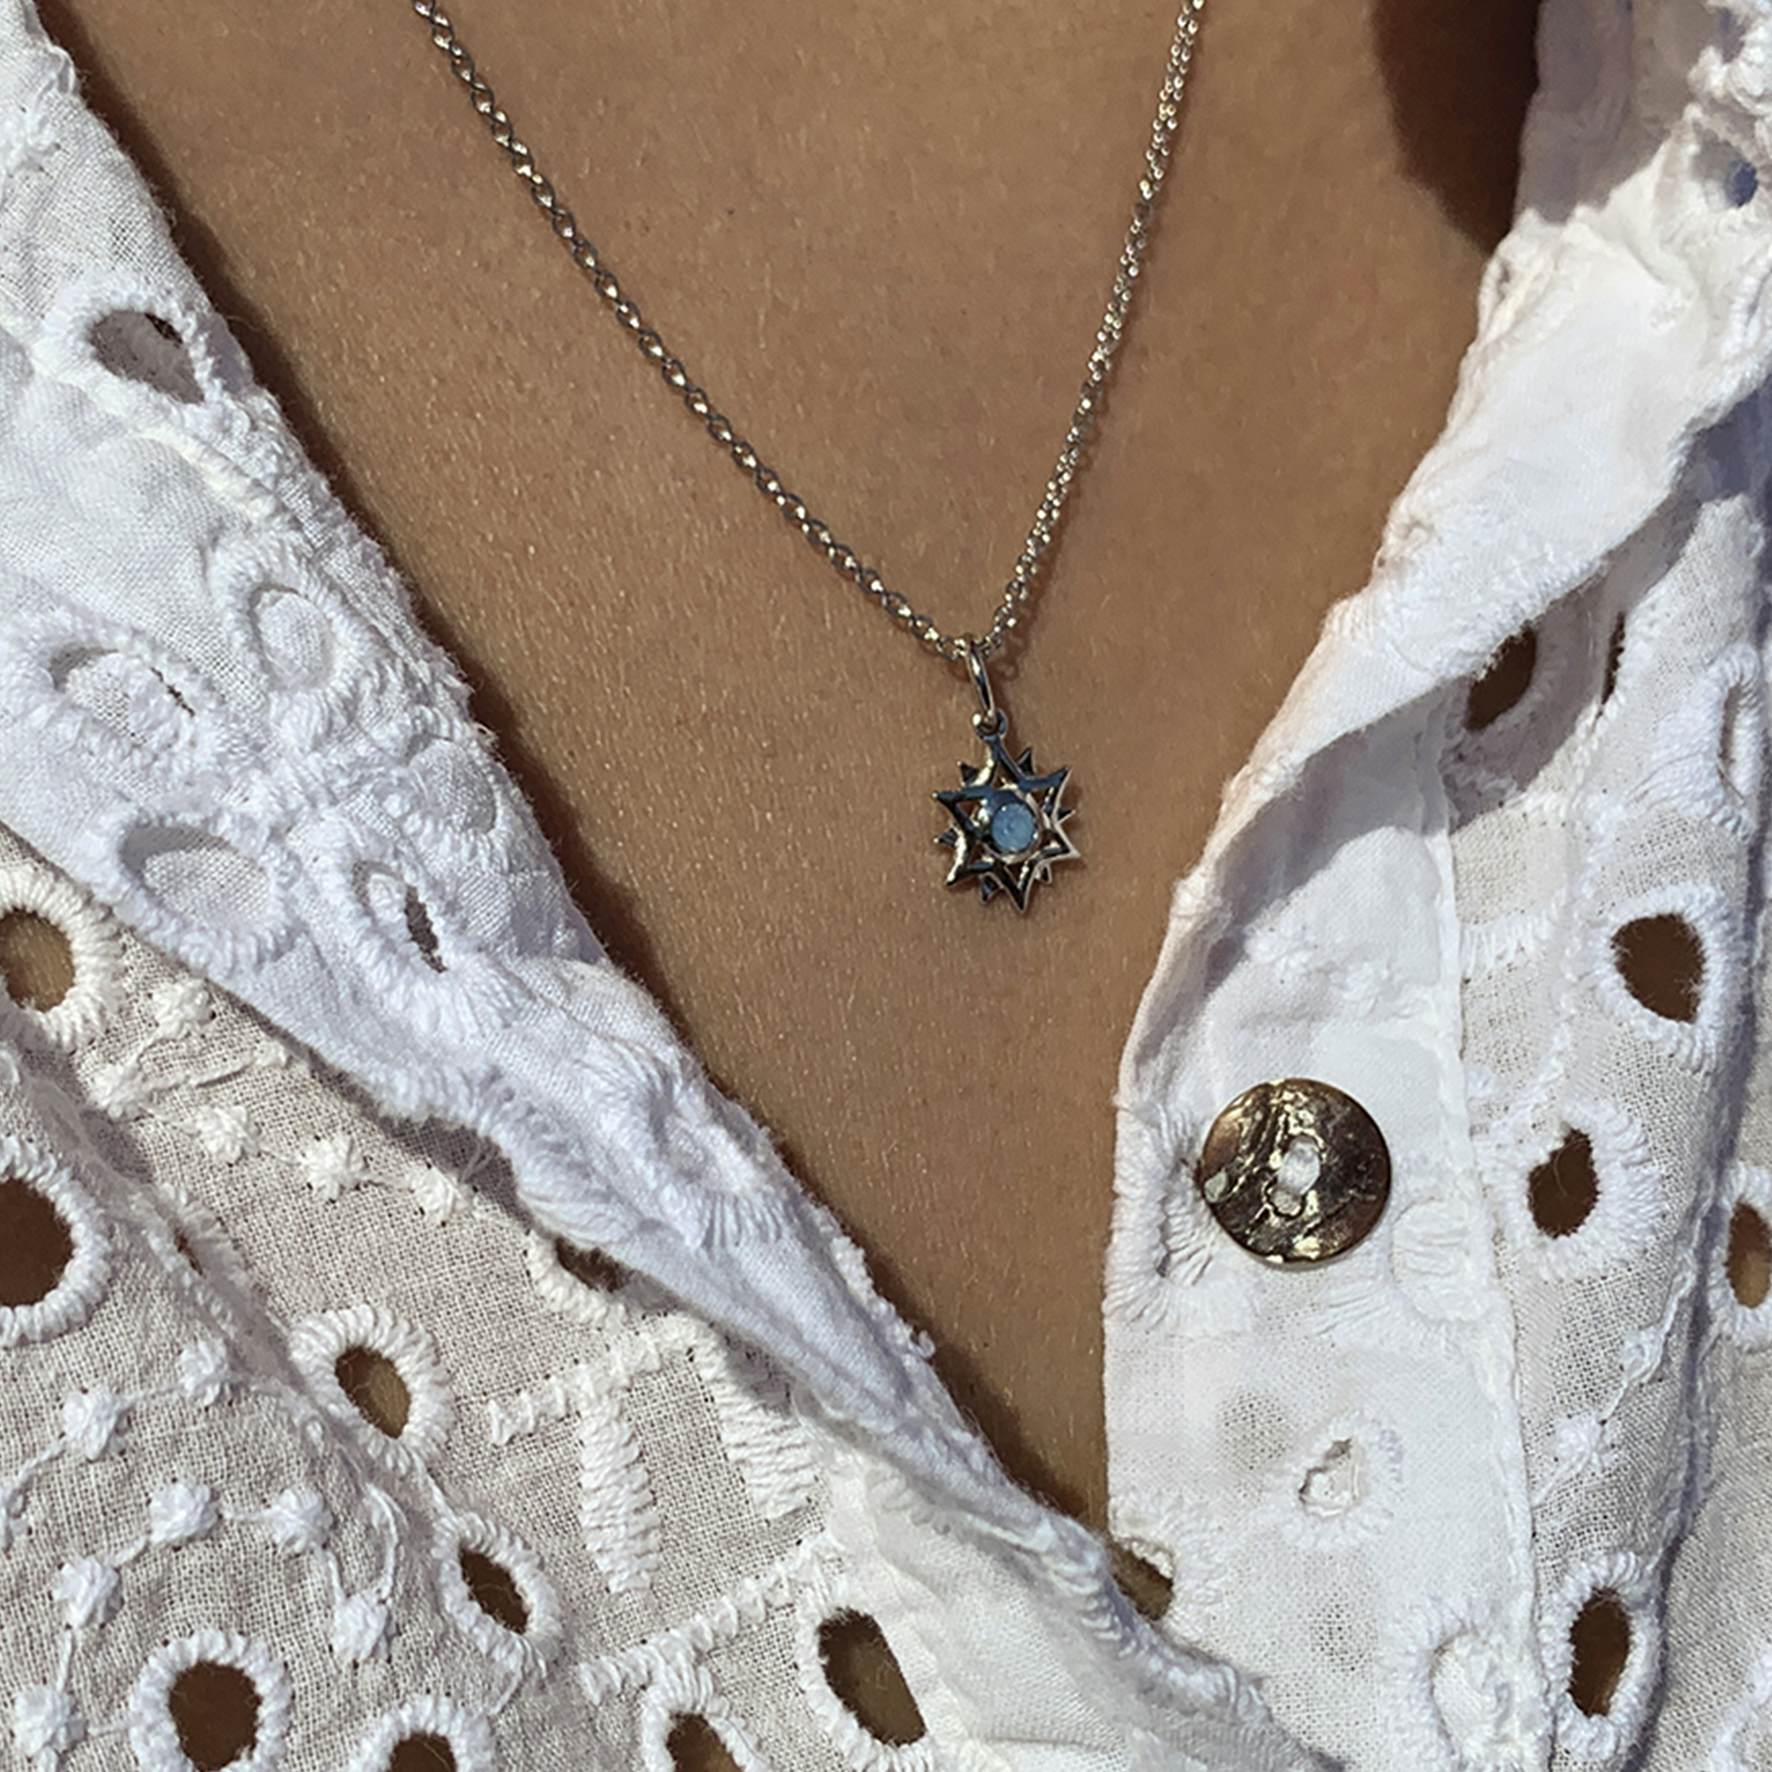 Olivia by Sistie Pendant Necklace von Sistie in Silber Sterling 925